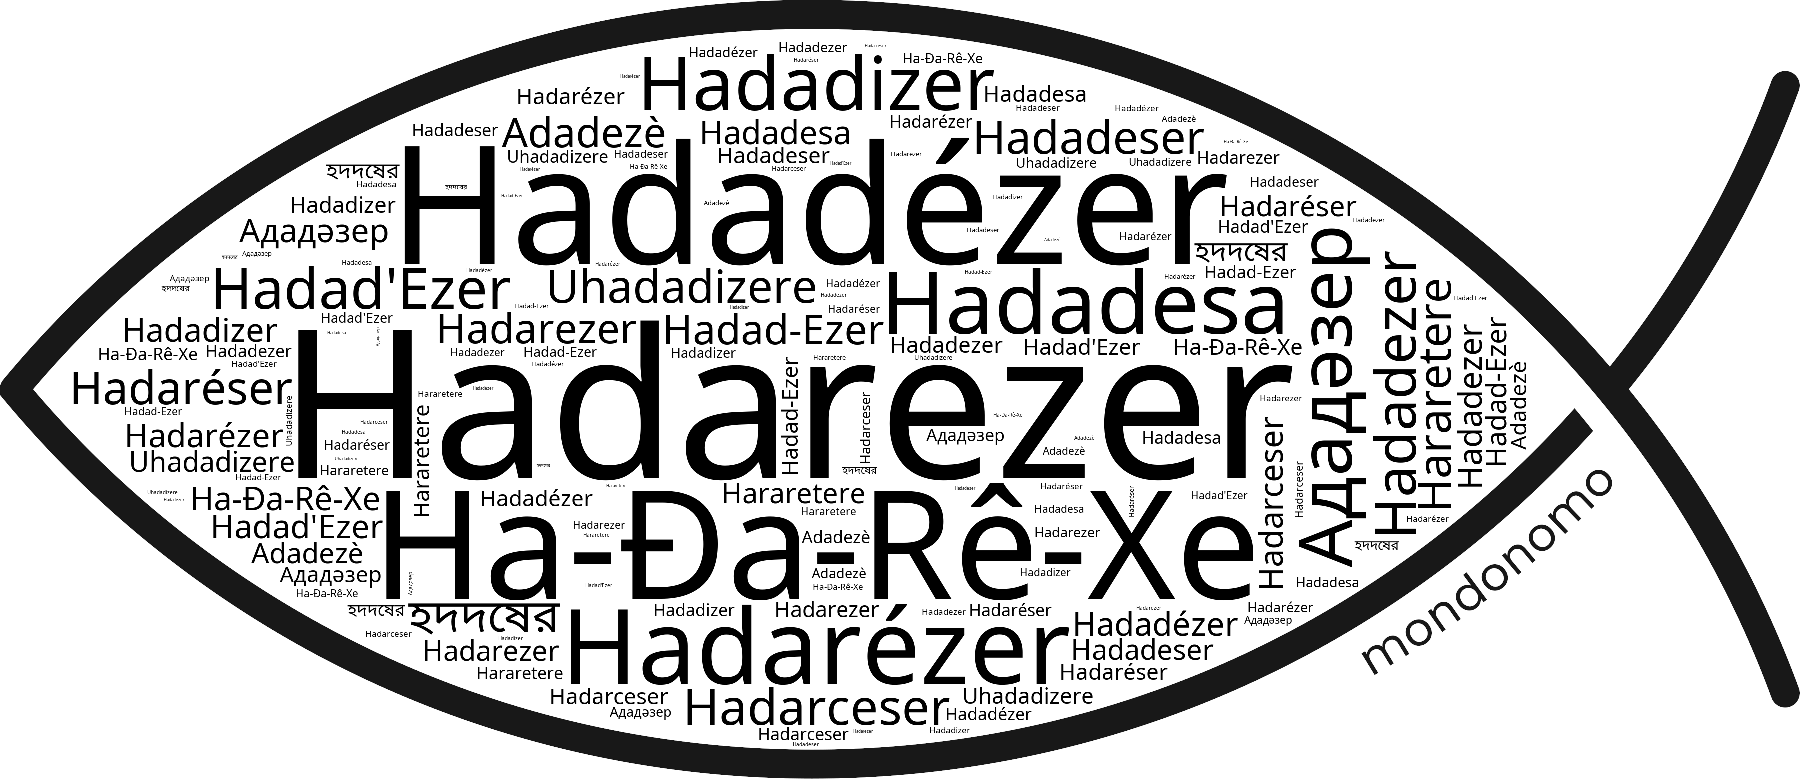 Name Hadarezer in the world's Bibles